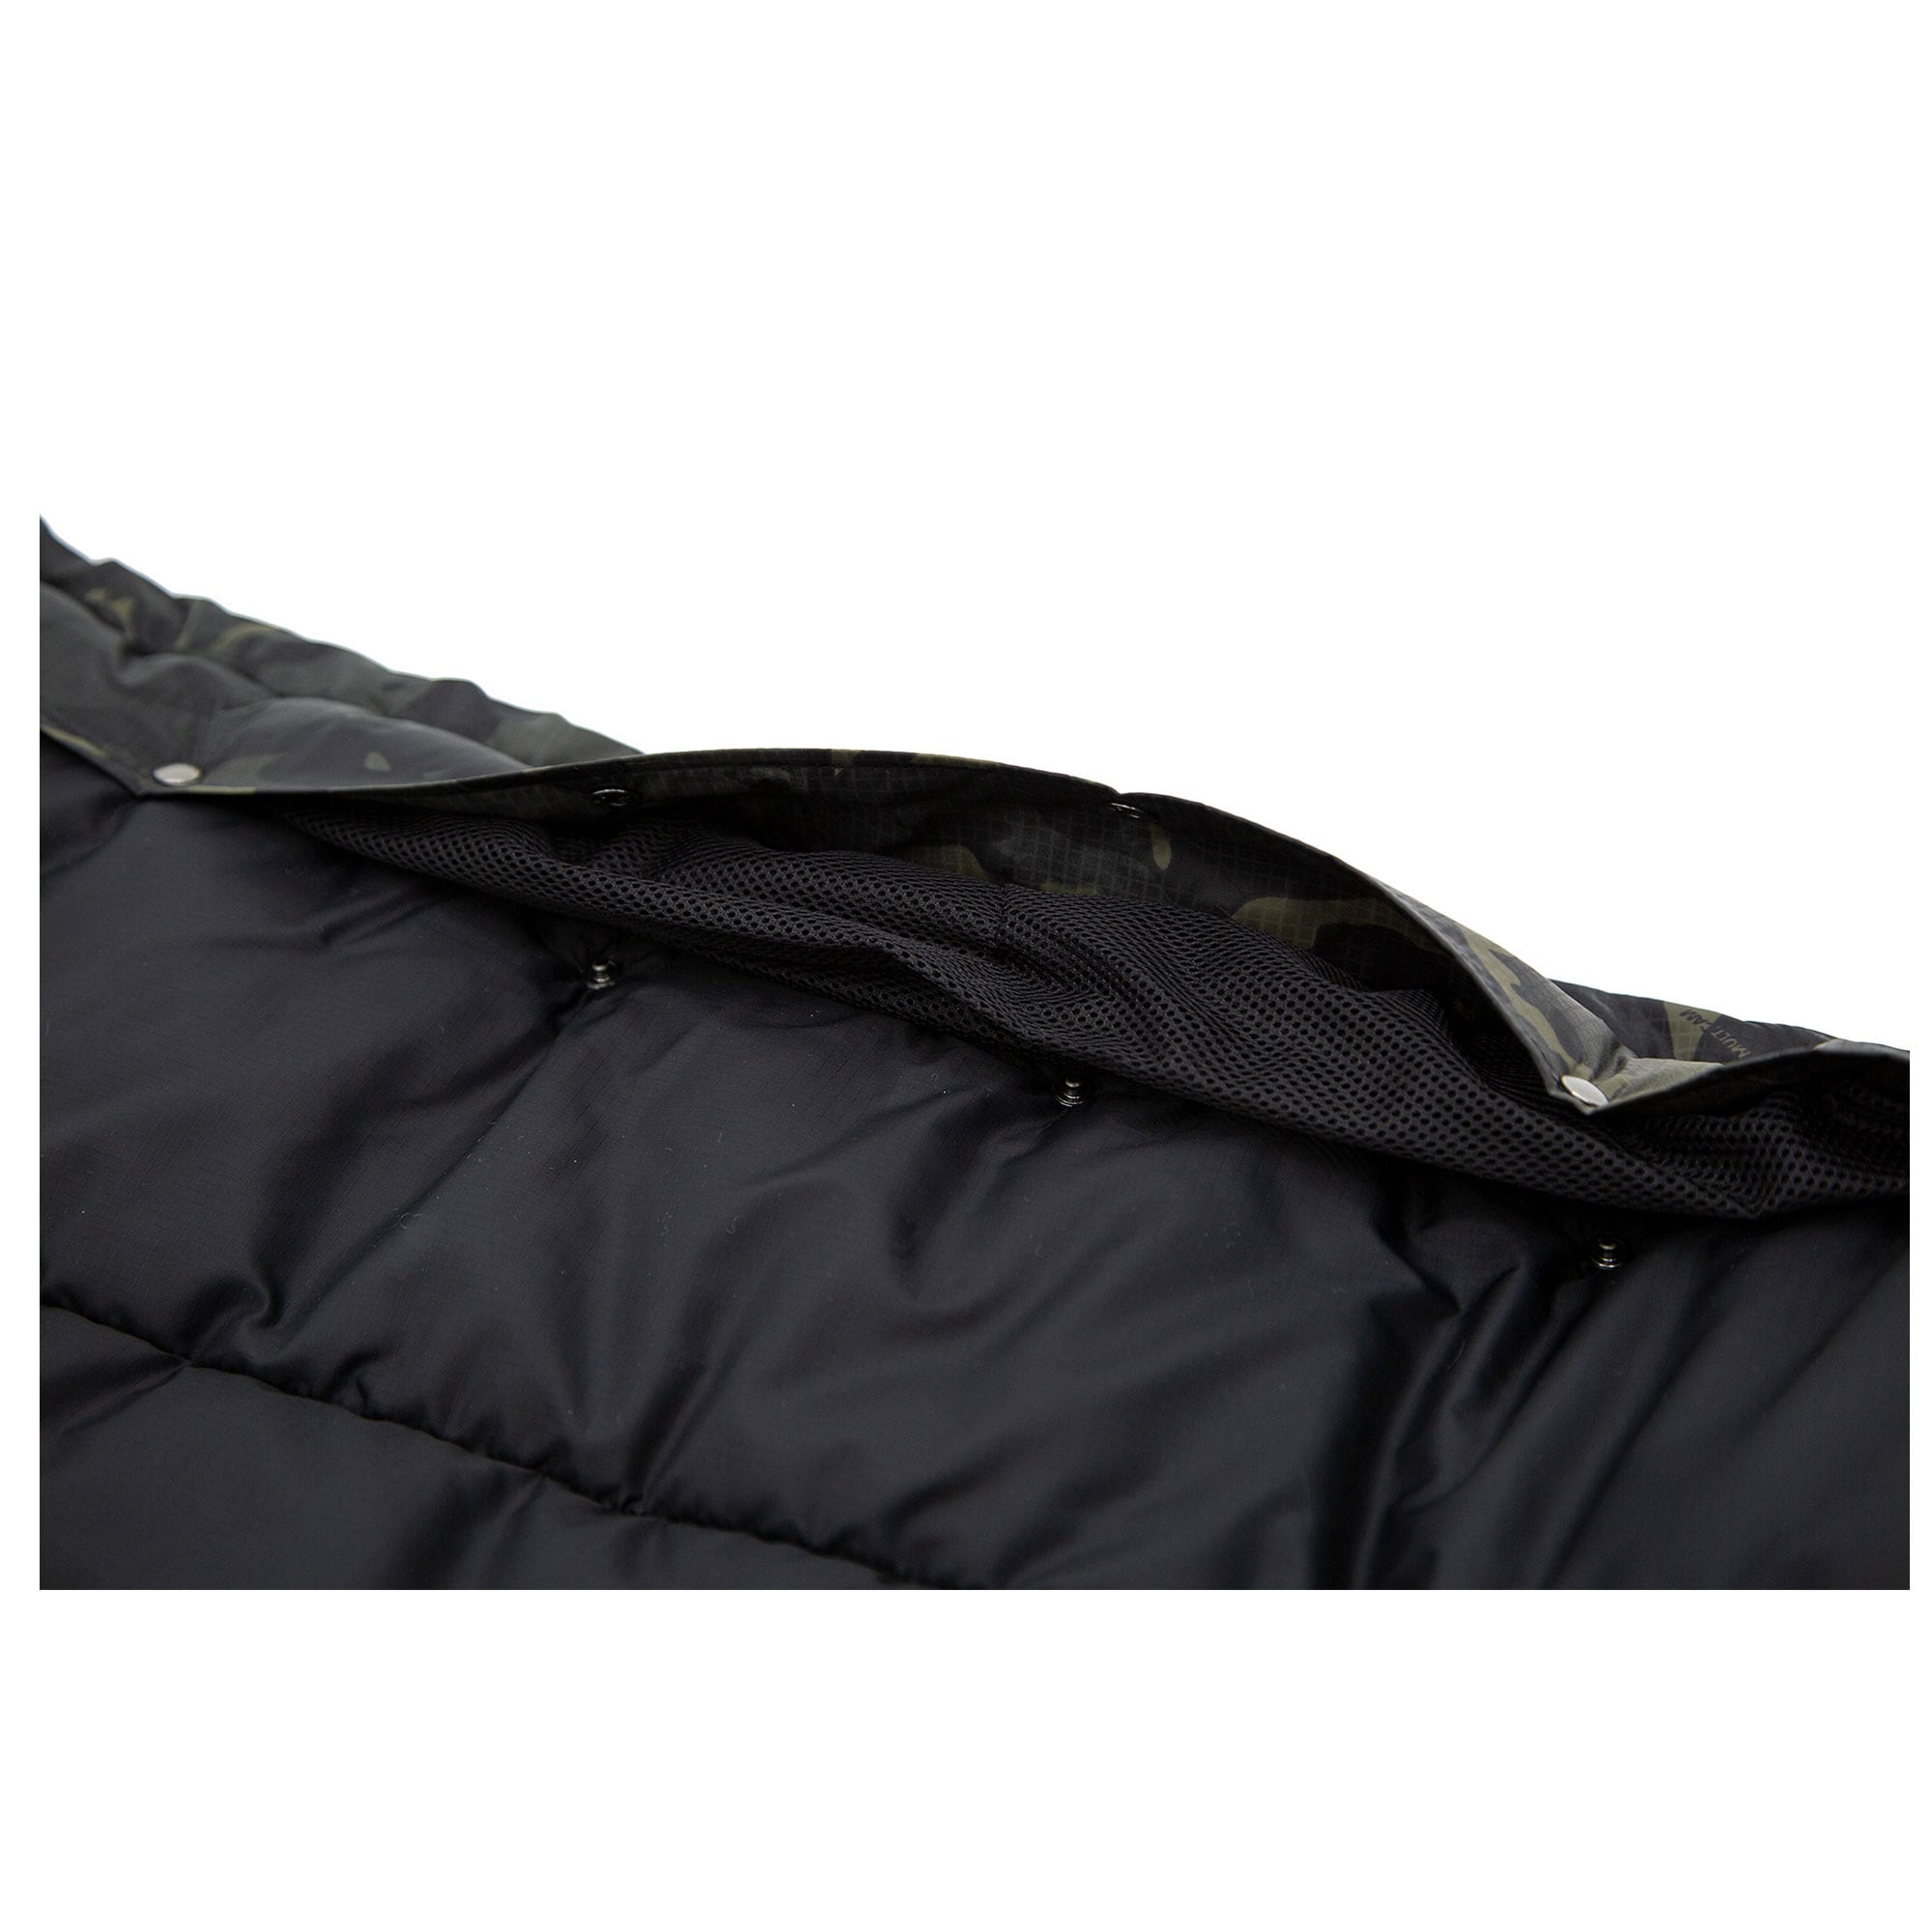 Purchase the Carinthia Tropical Sleeping Bag 185 cm multicam bla